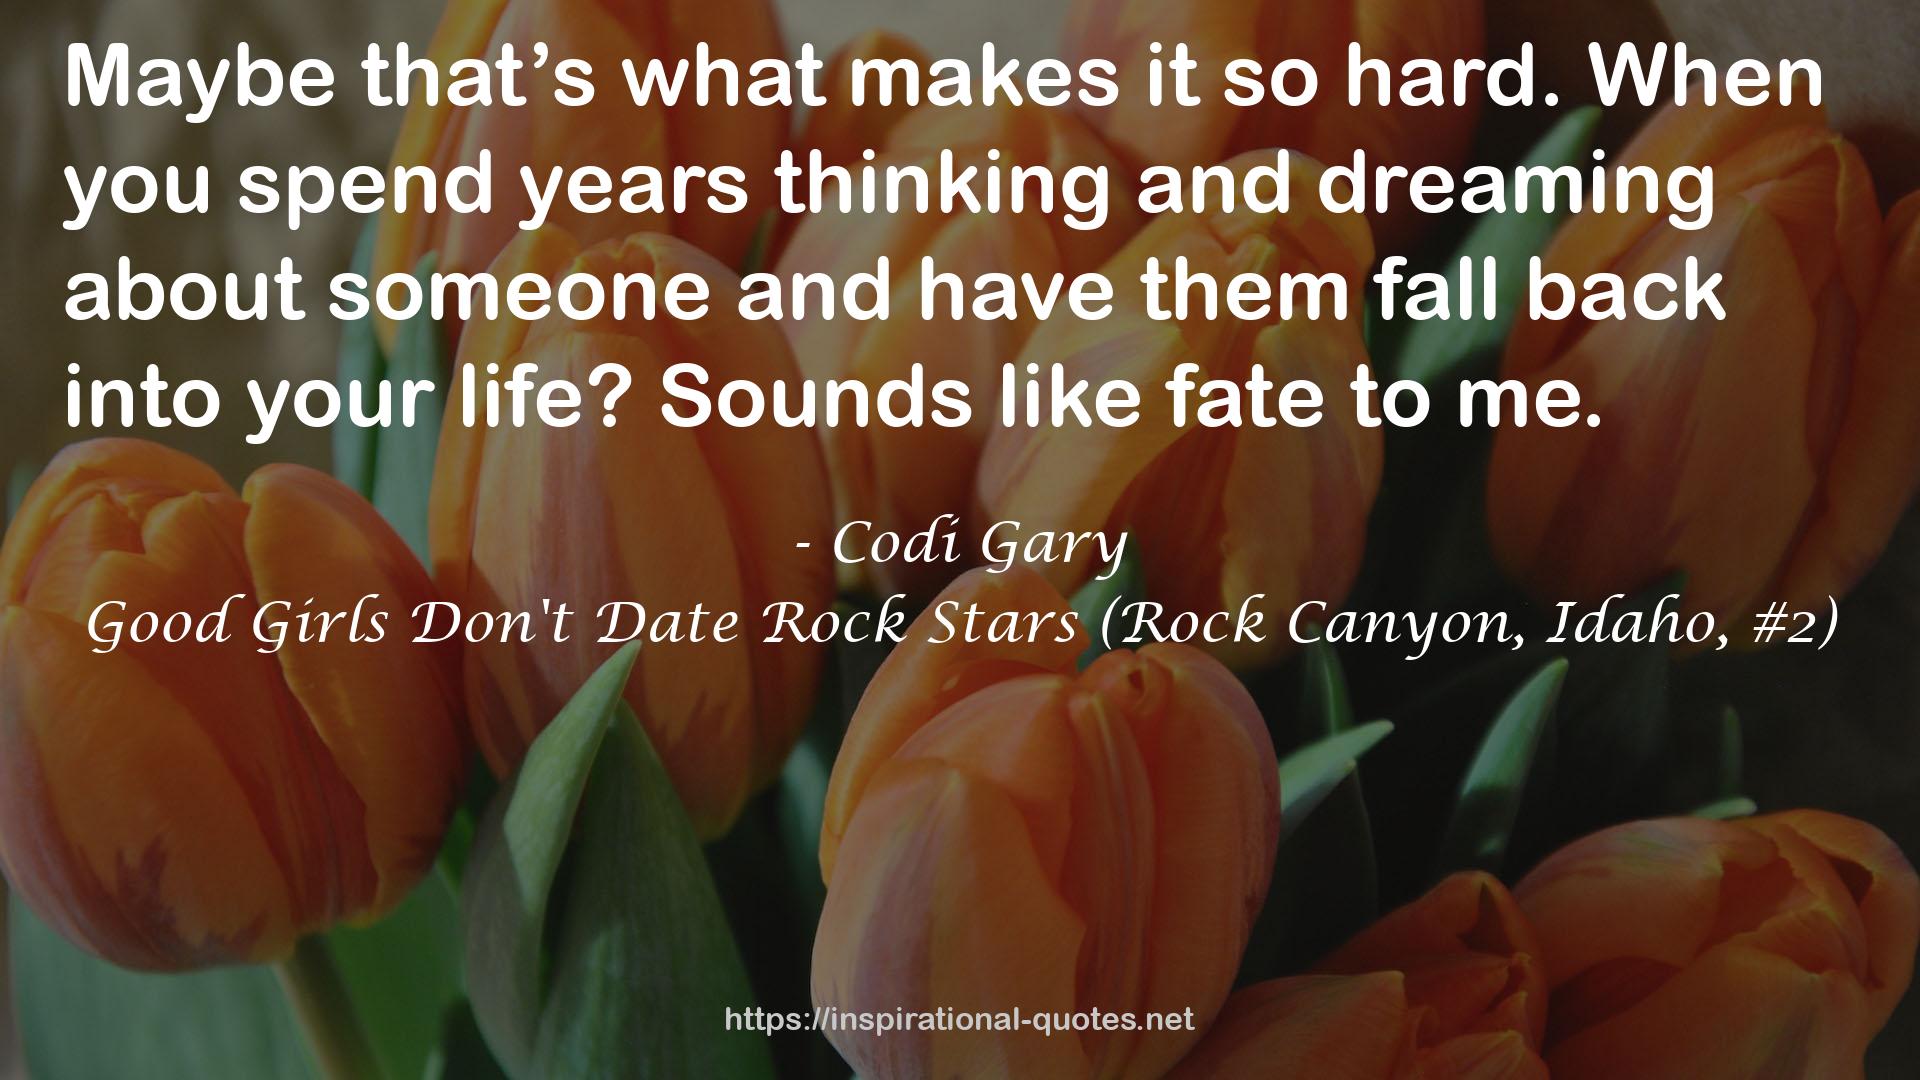 Good Girls Don't Date Rock Stars (Rock Canyon, Idaho, #2) QUOTES